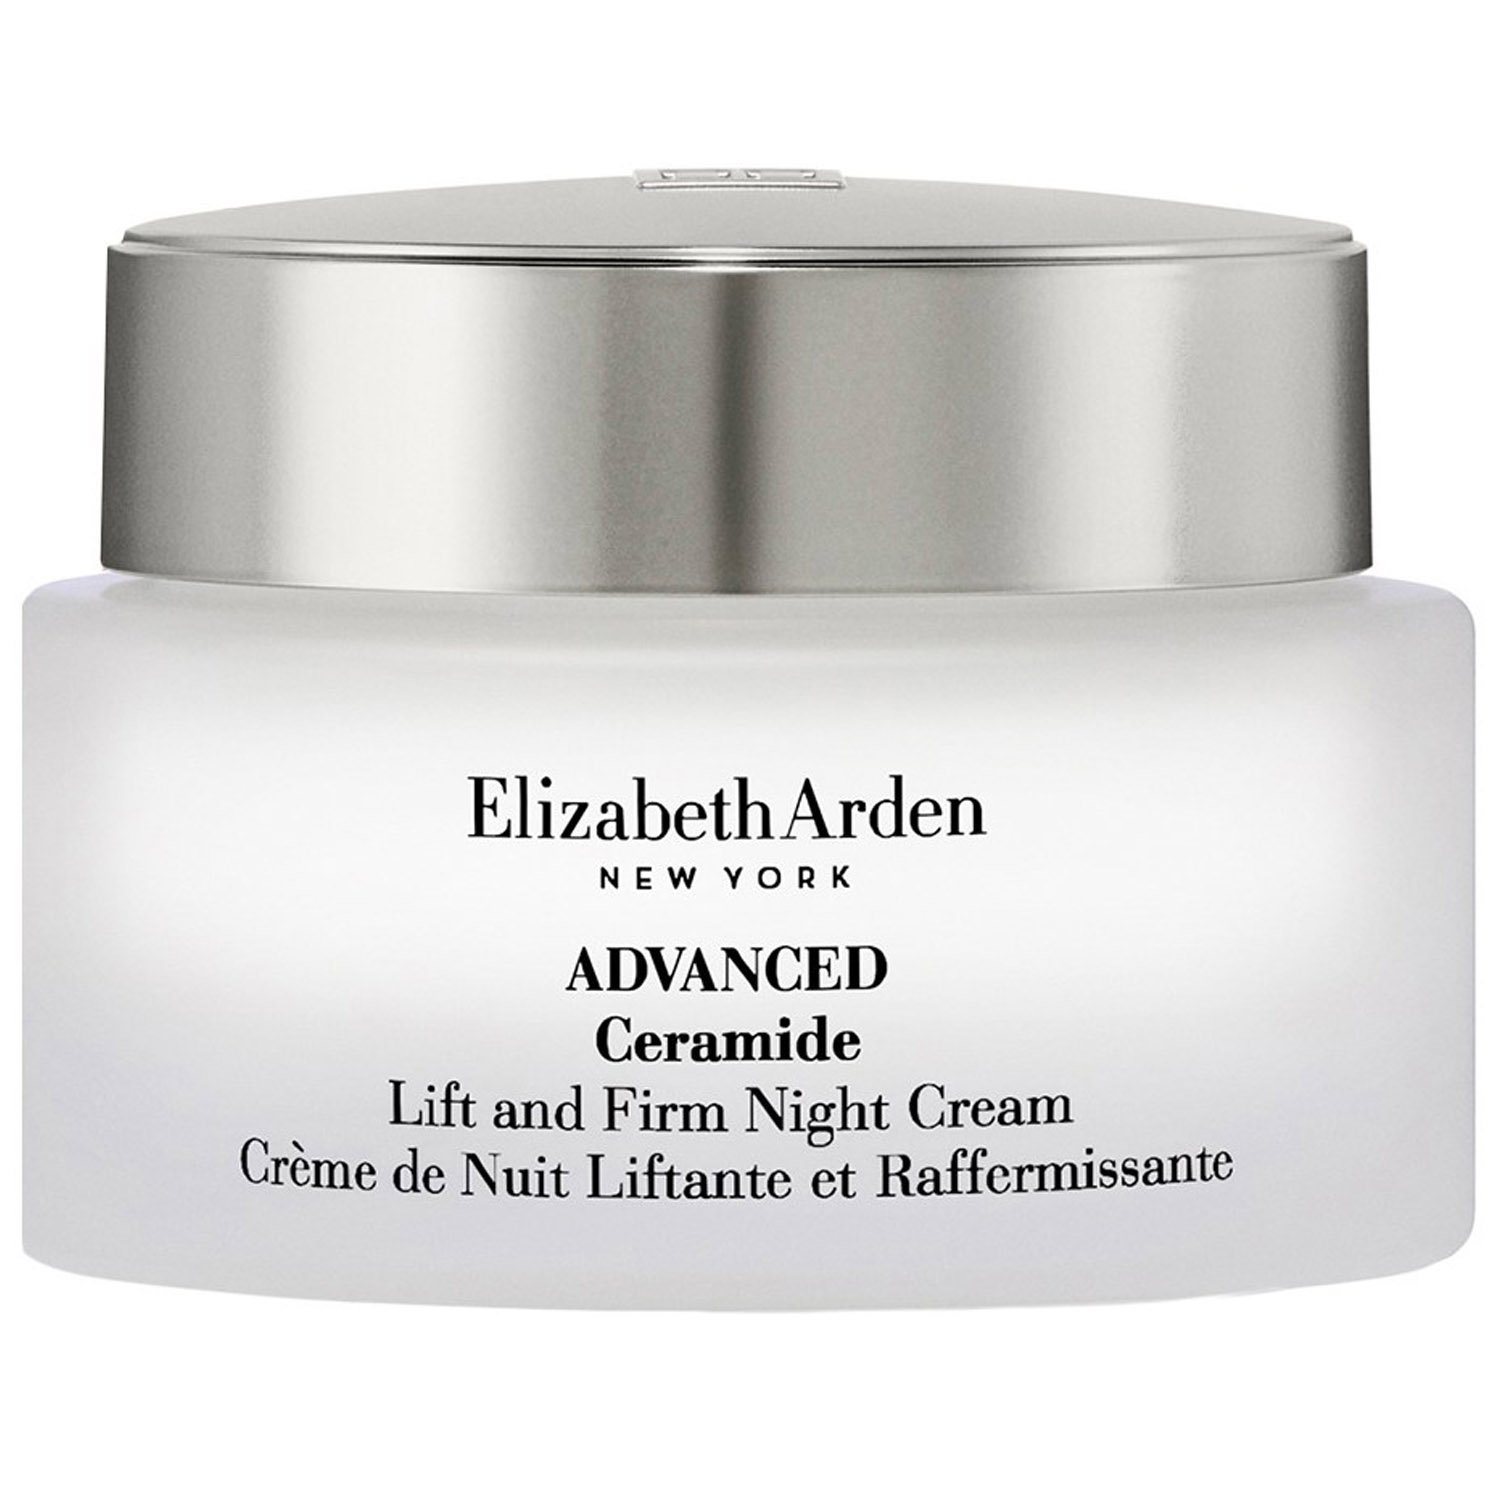 Крем для лица Elizabeth Arden Advanced Ceramide Lift and Firm Night Cream, восстанавливающий, 50 мл - фото 1